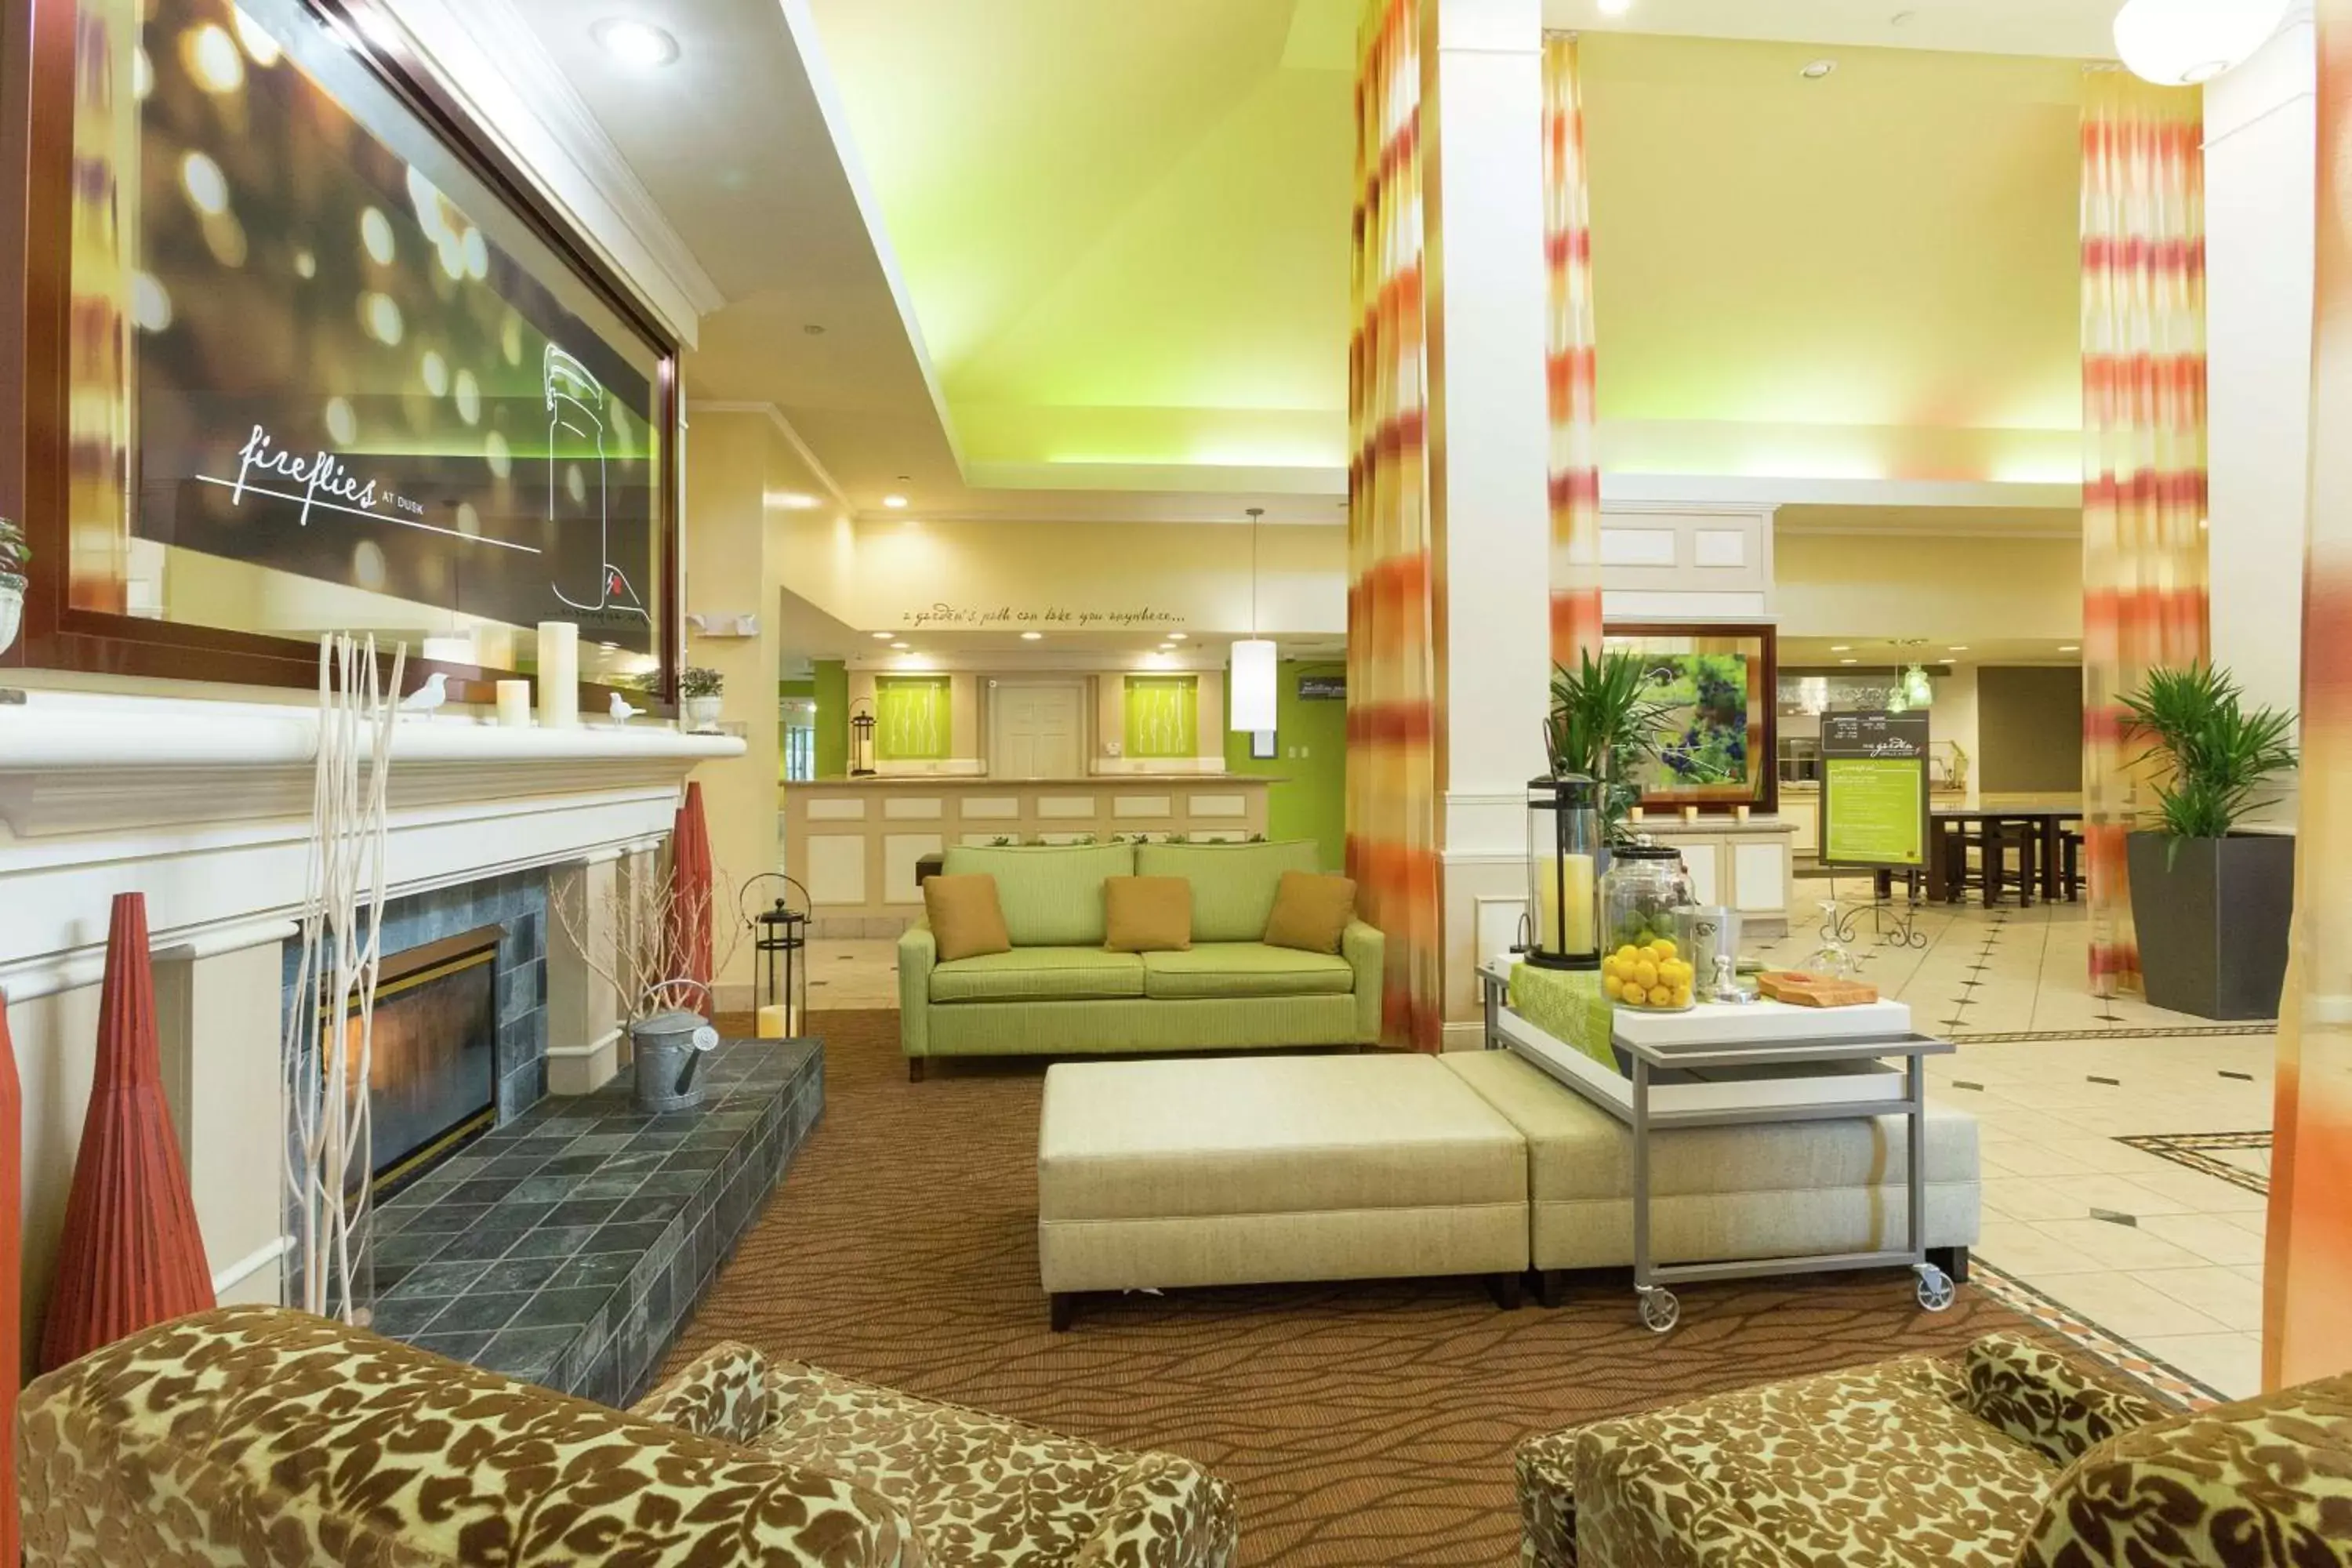 Lobby or reception in Hilton Garden Inn Jacksonville Airport